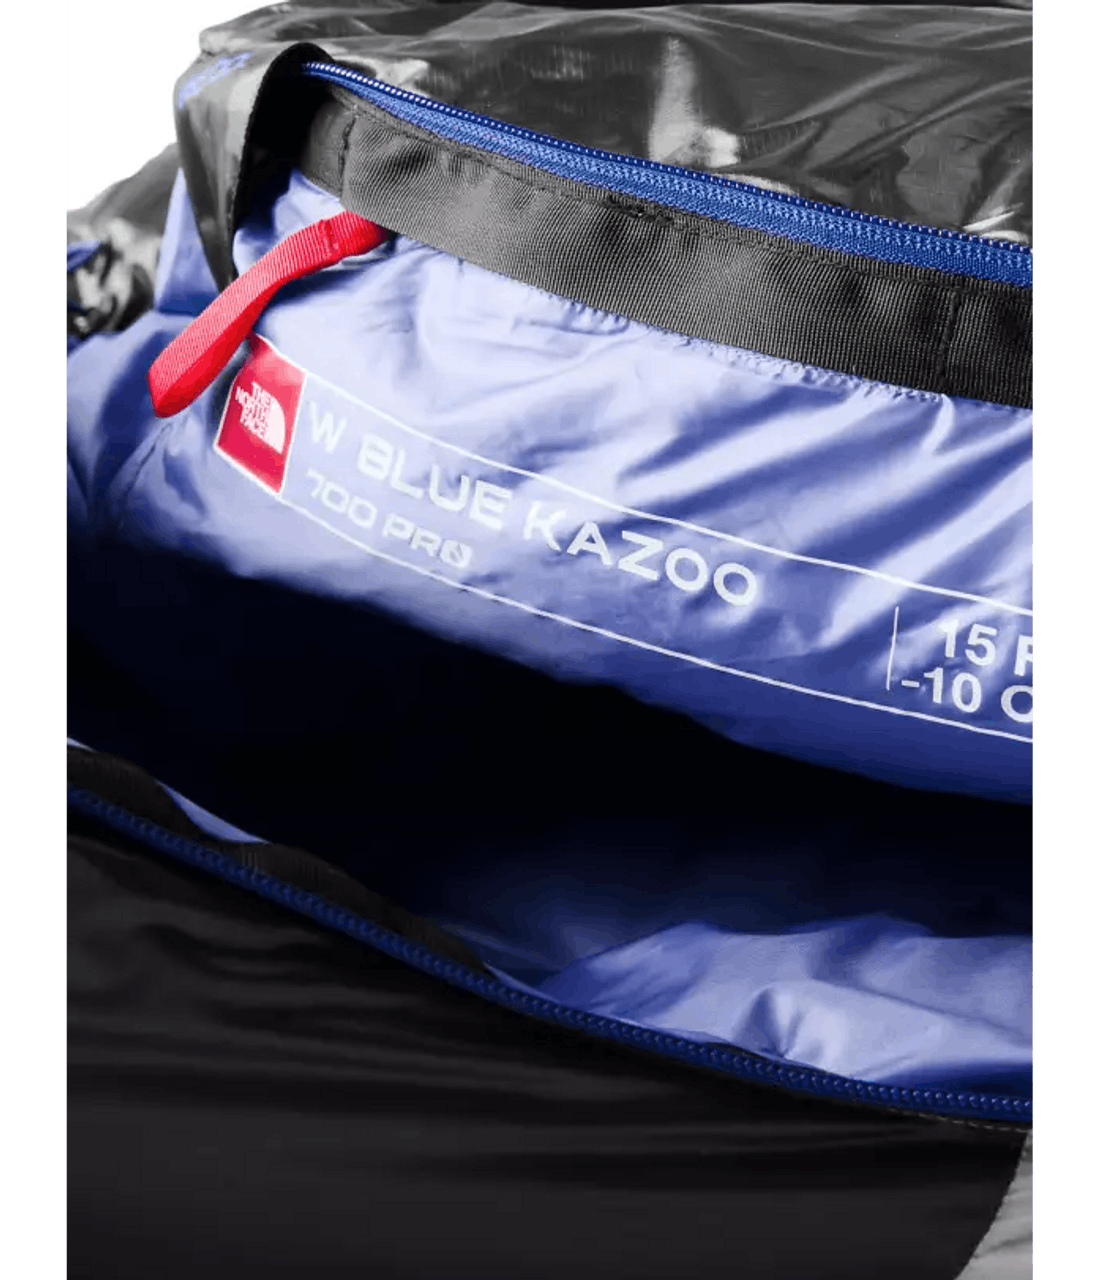 The North Face Blue Kazoo 15 Sleeping Bag - Women's